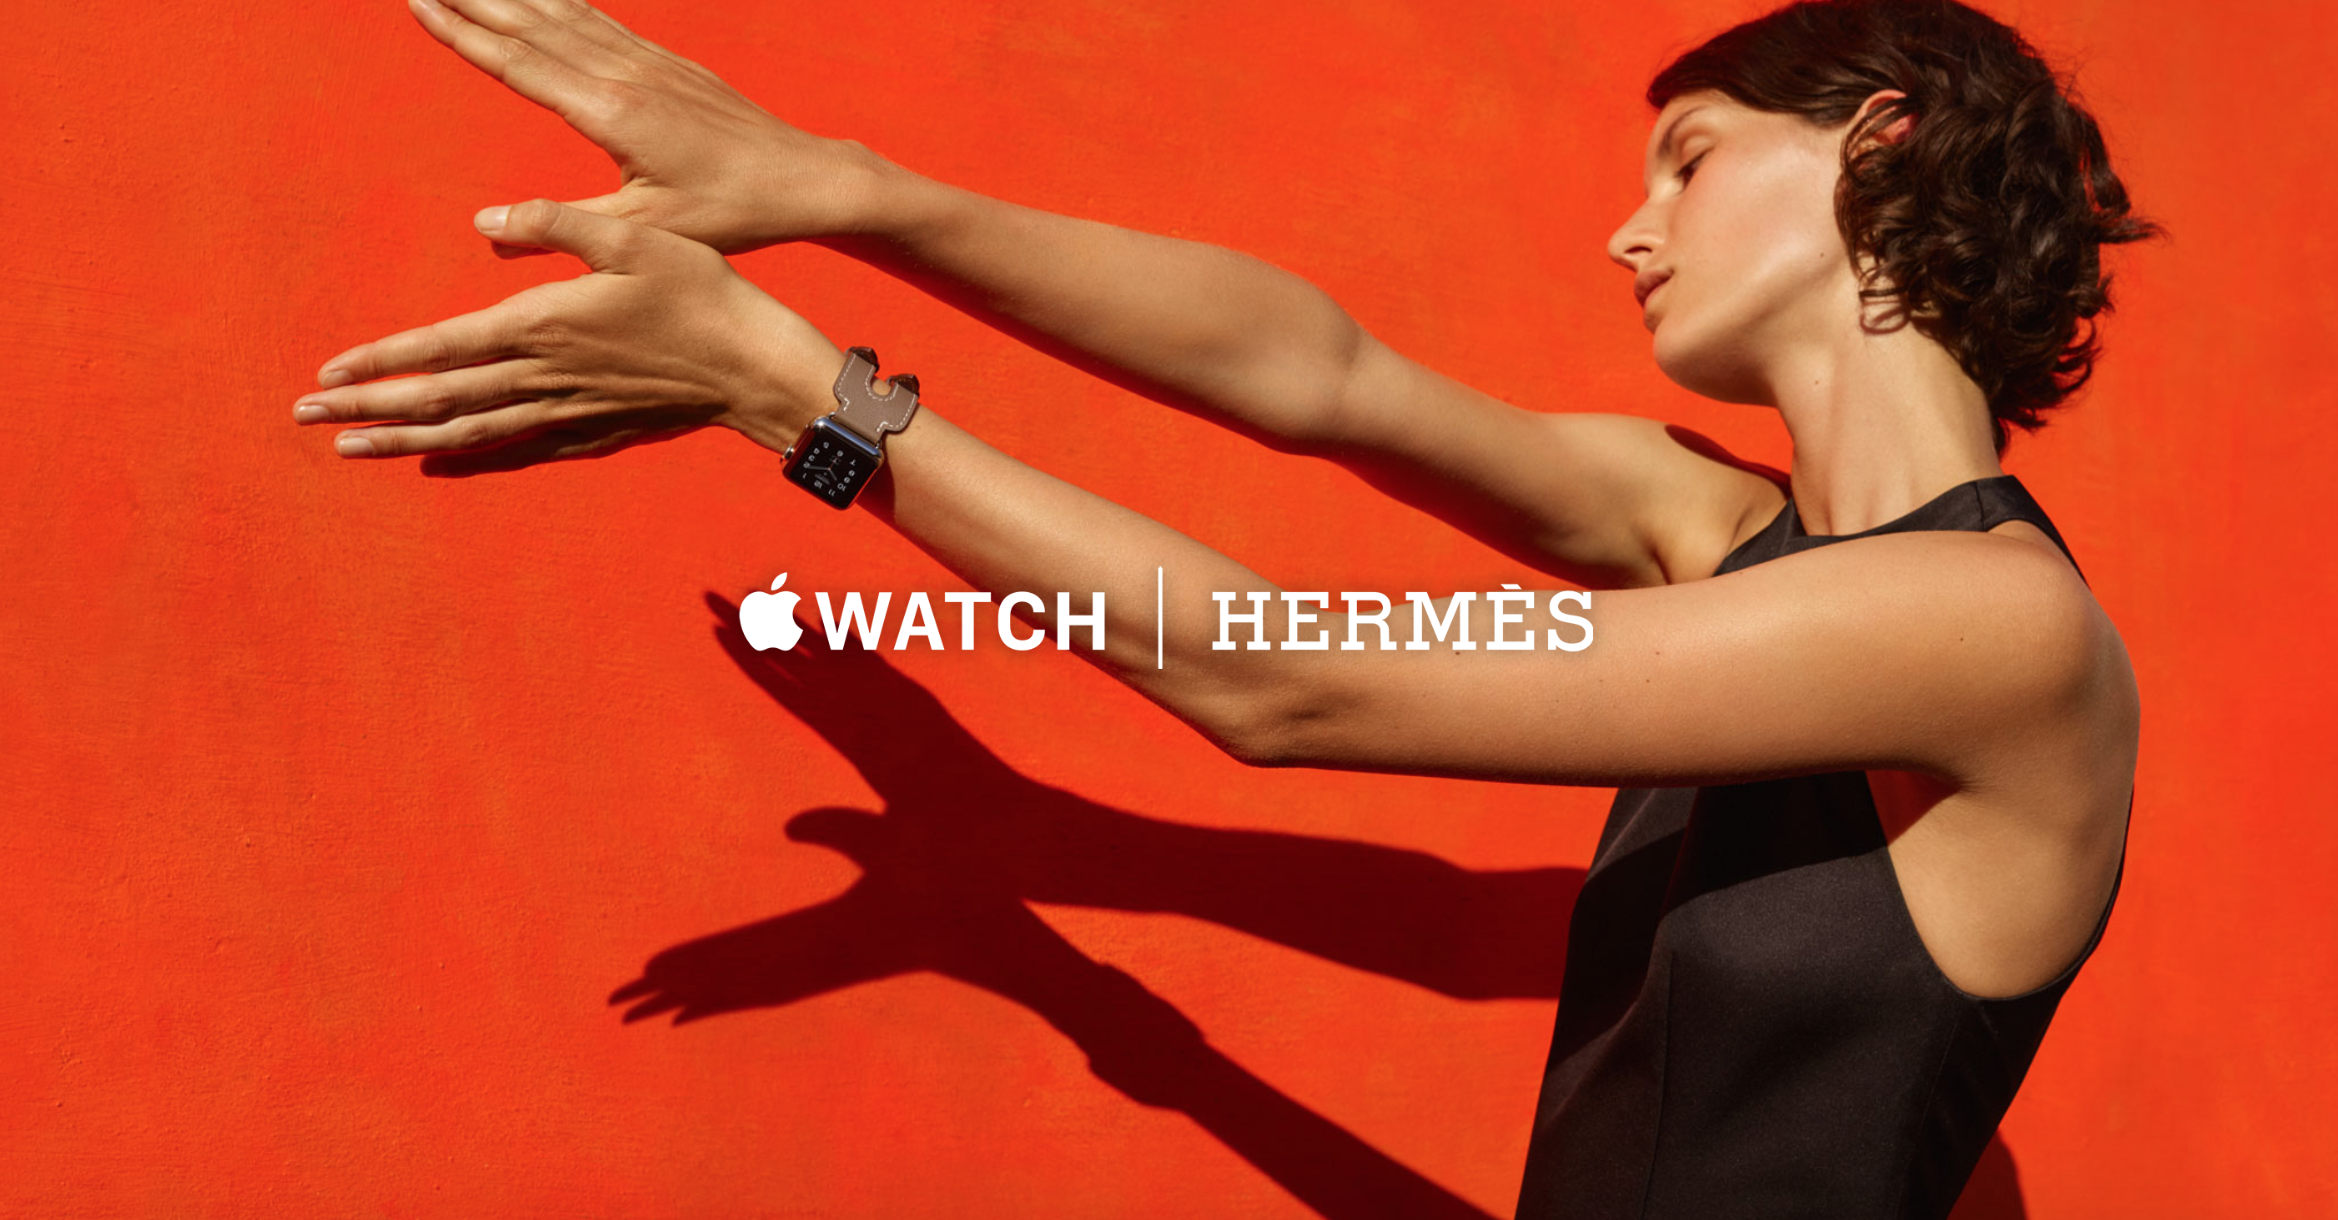 Apple Watch Hermés Series 2 Arrives Today